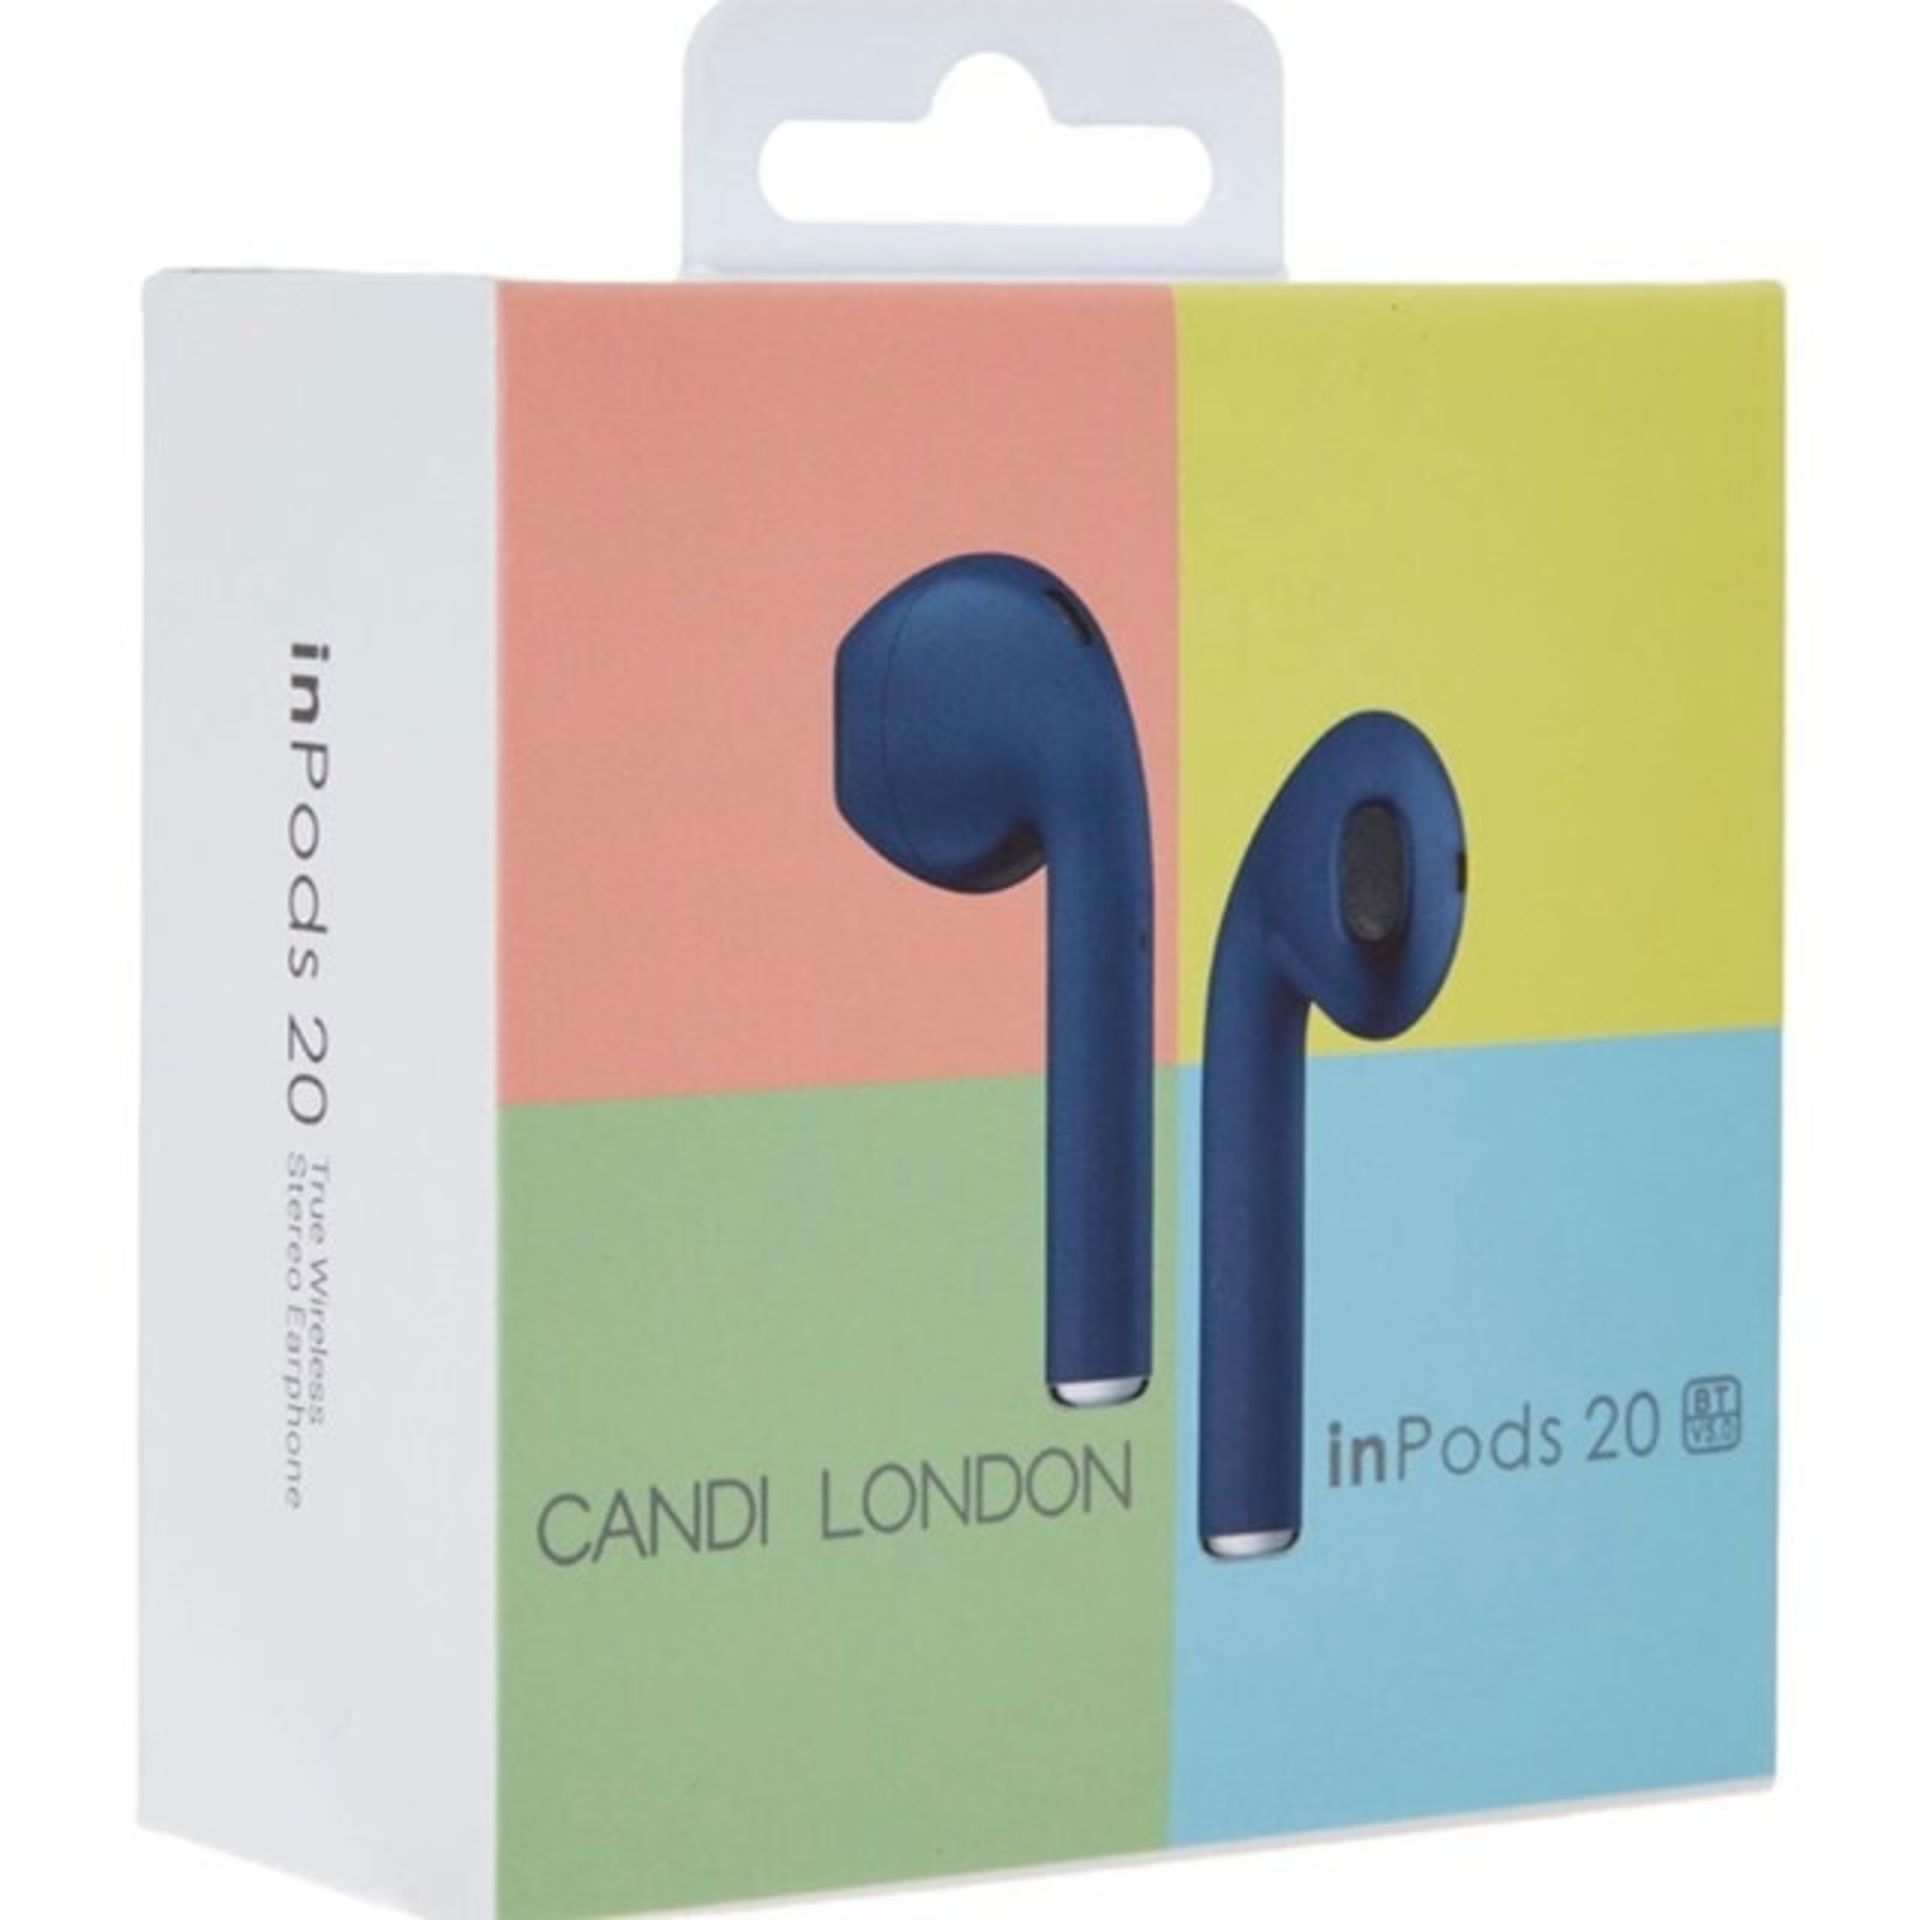 Candi London Inpods 20 GreyTrue Wireless Bluetooth Earphones